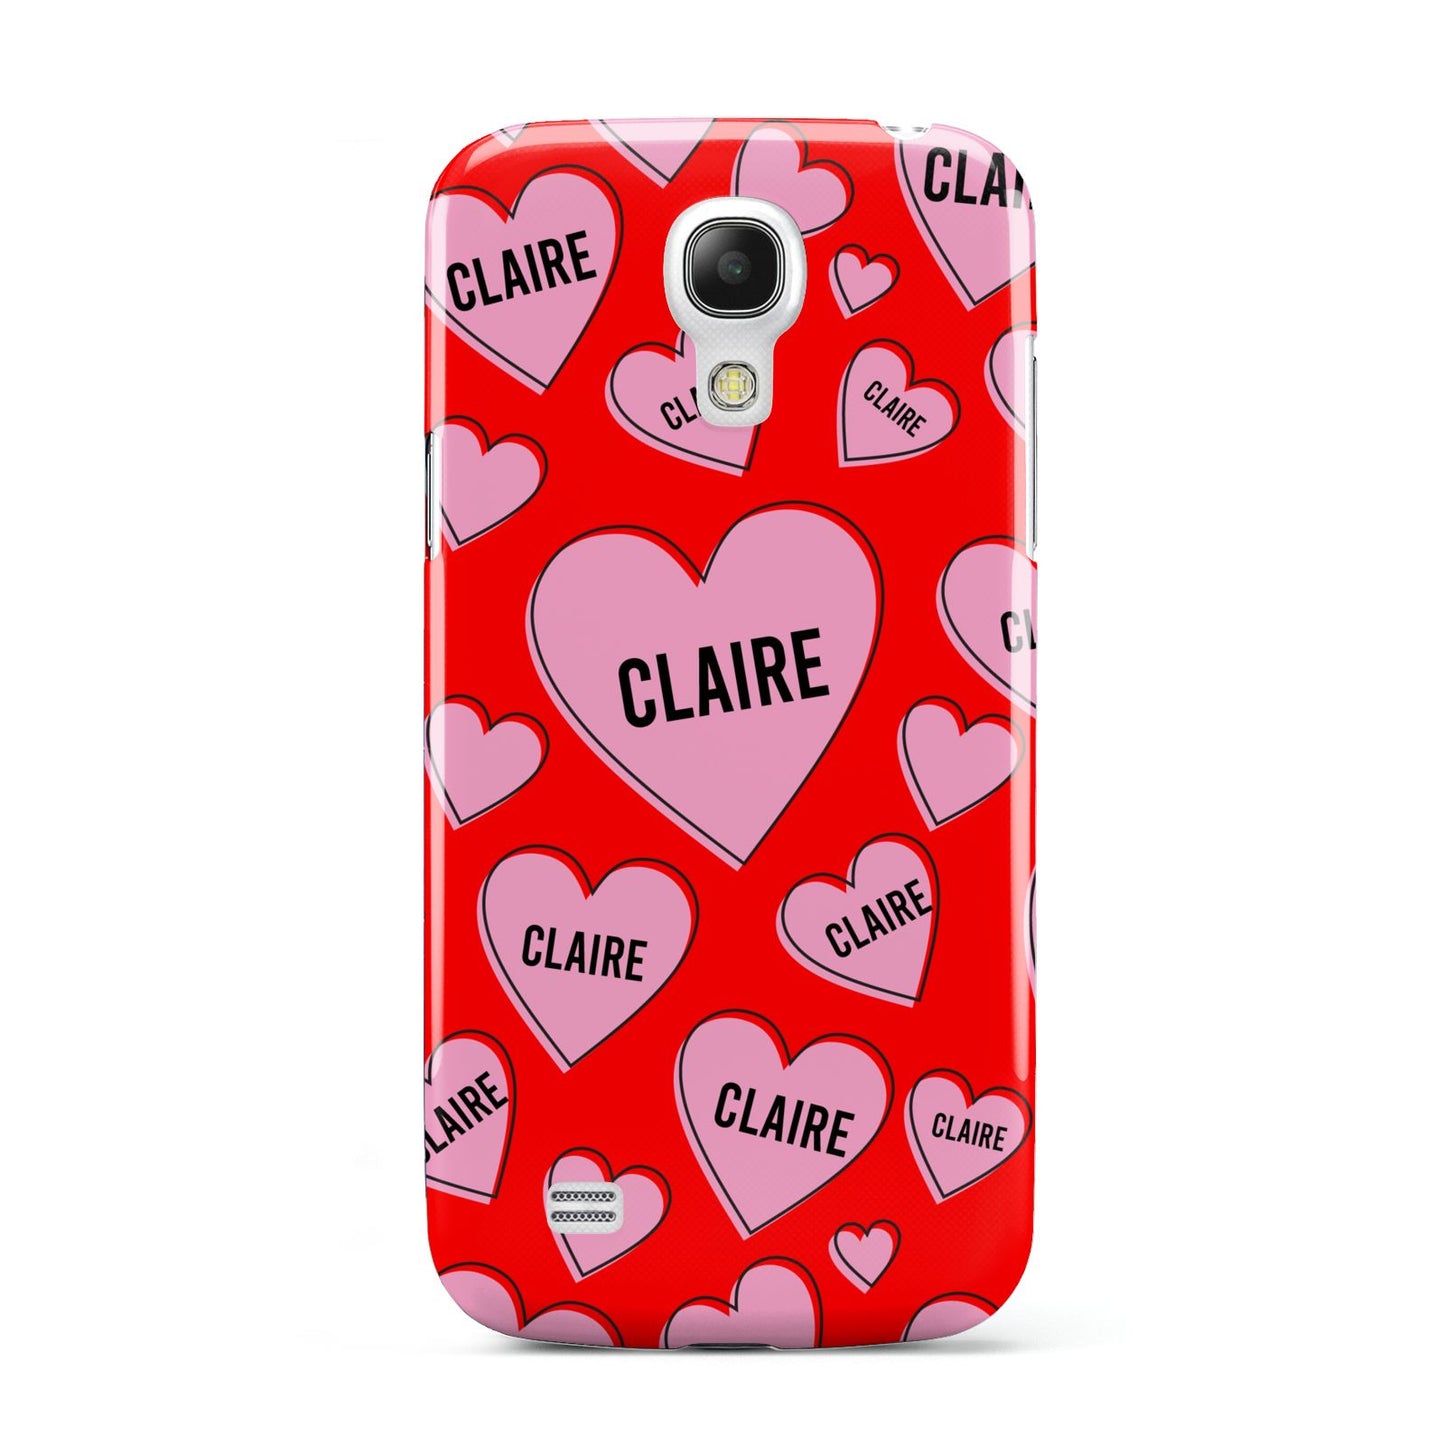 Personalised Hearts Samsung Galaxy S4 Mini Case